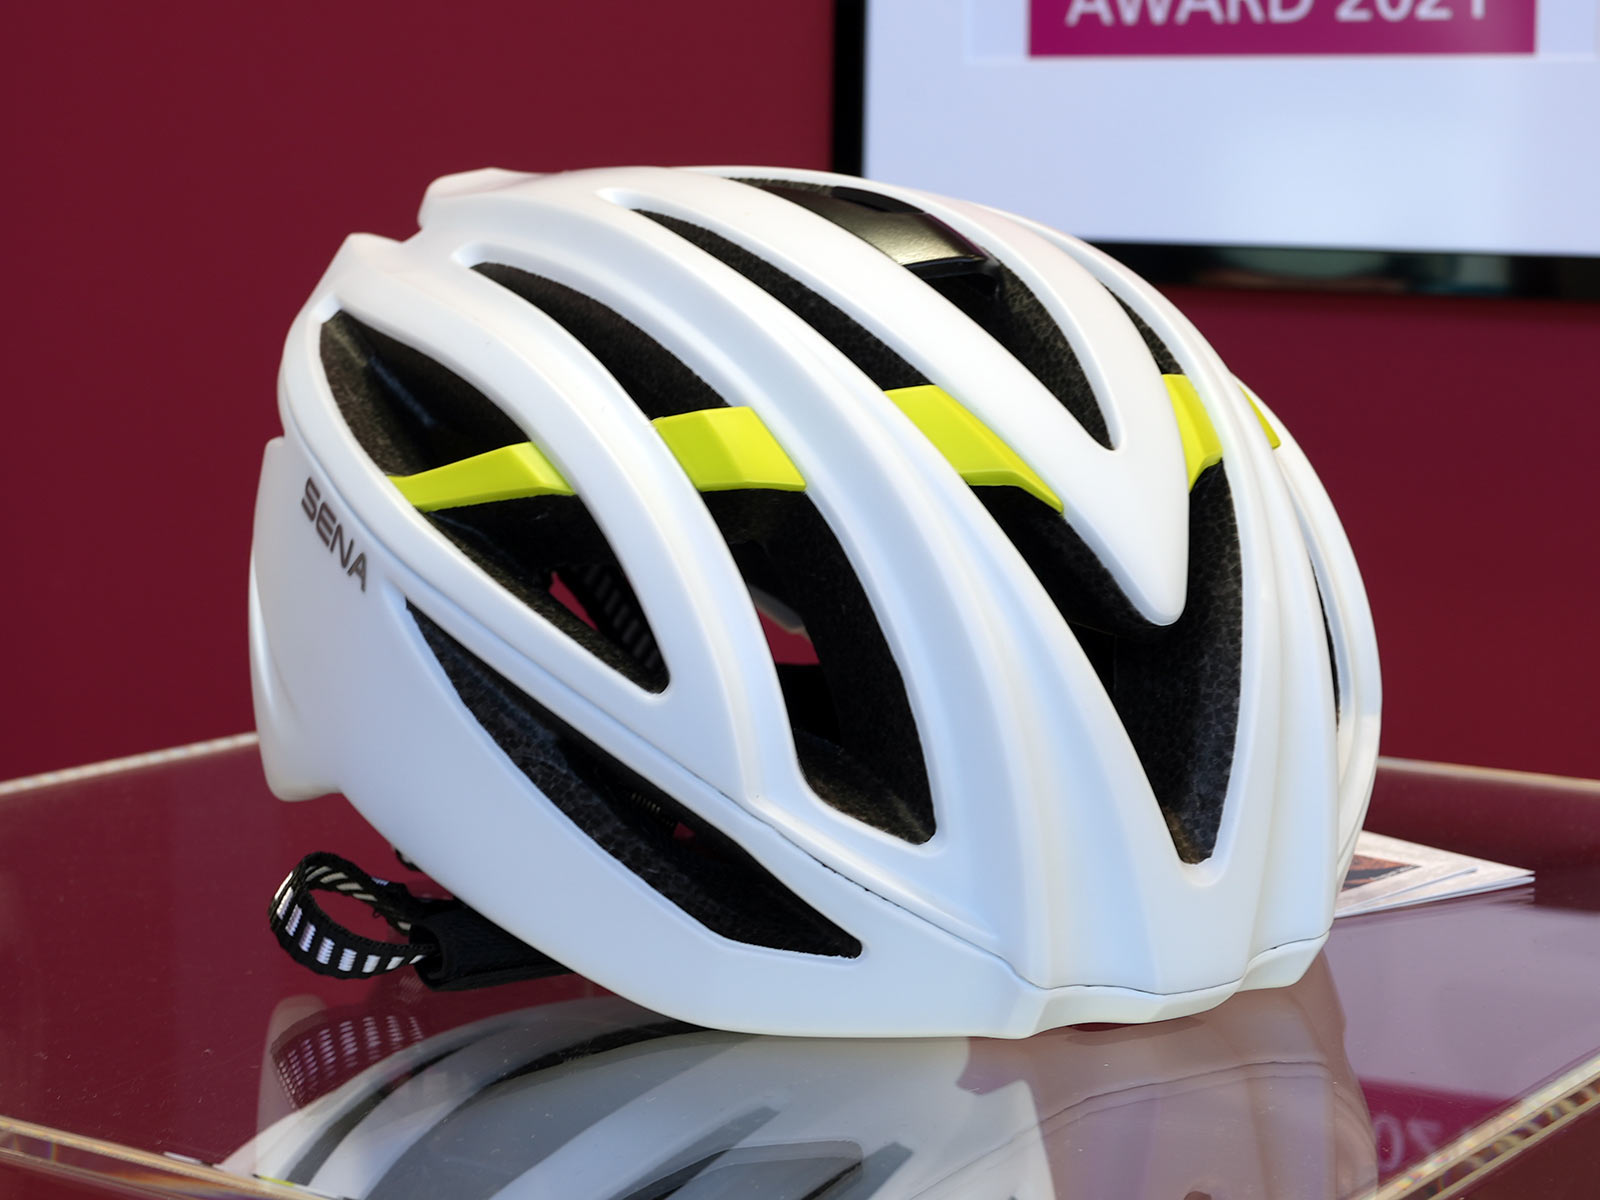 sena r2 road bike helmet with intercom wireless communication and bluetooth speaker